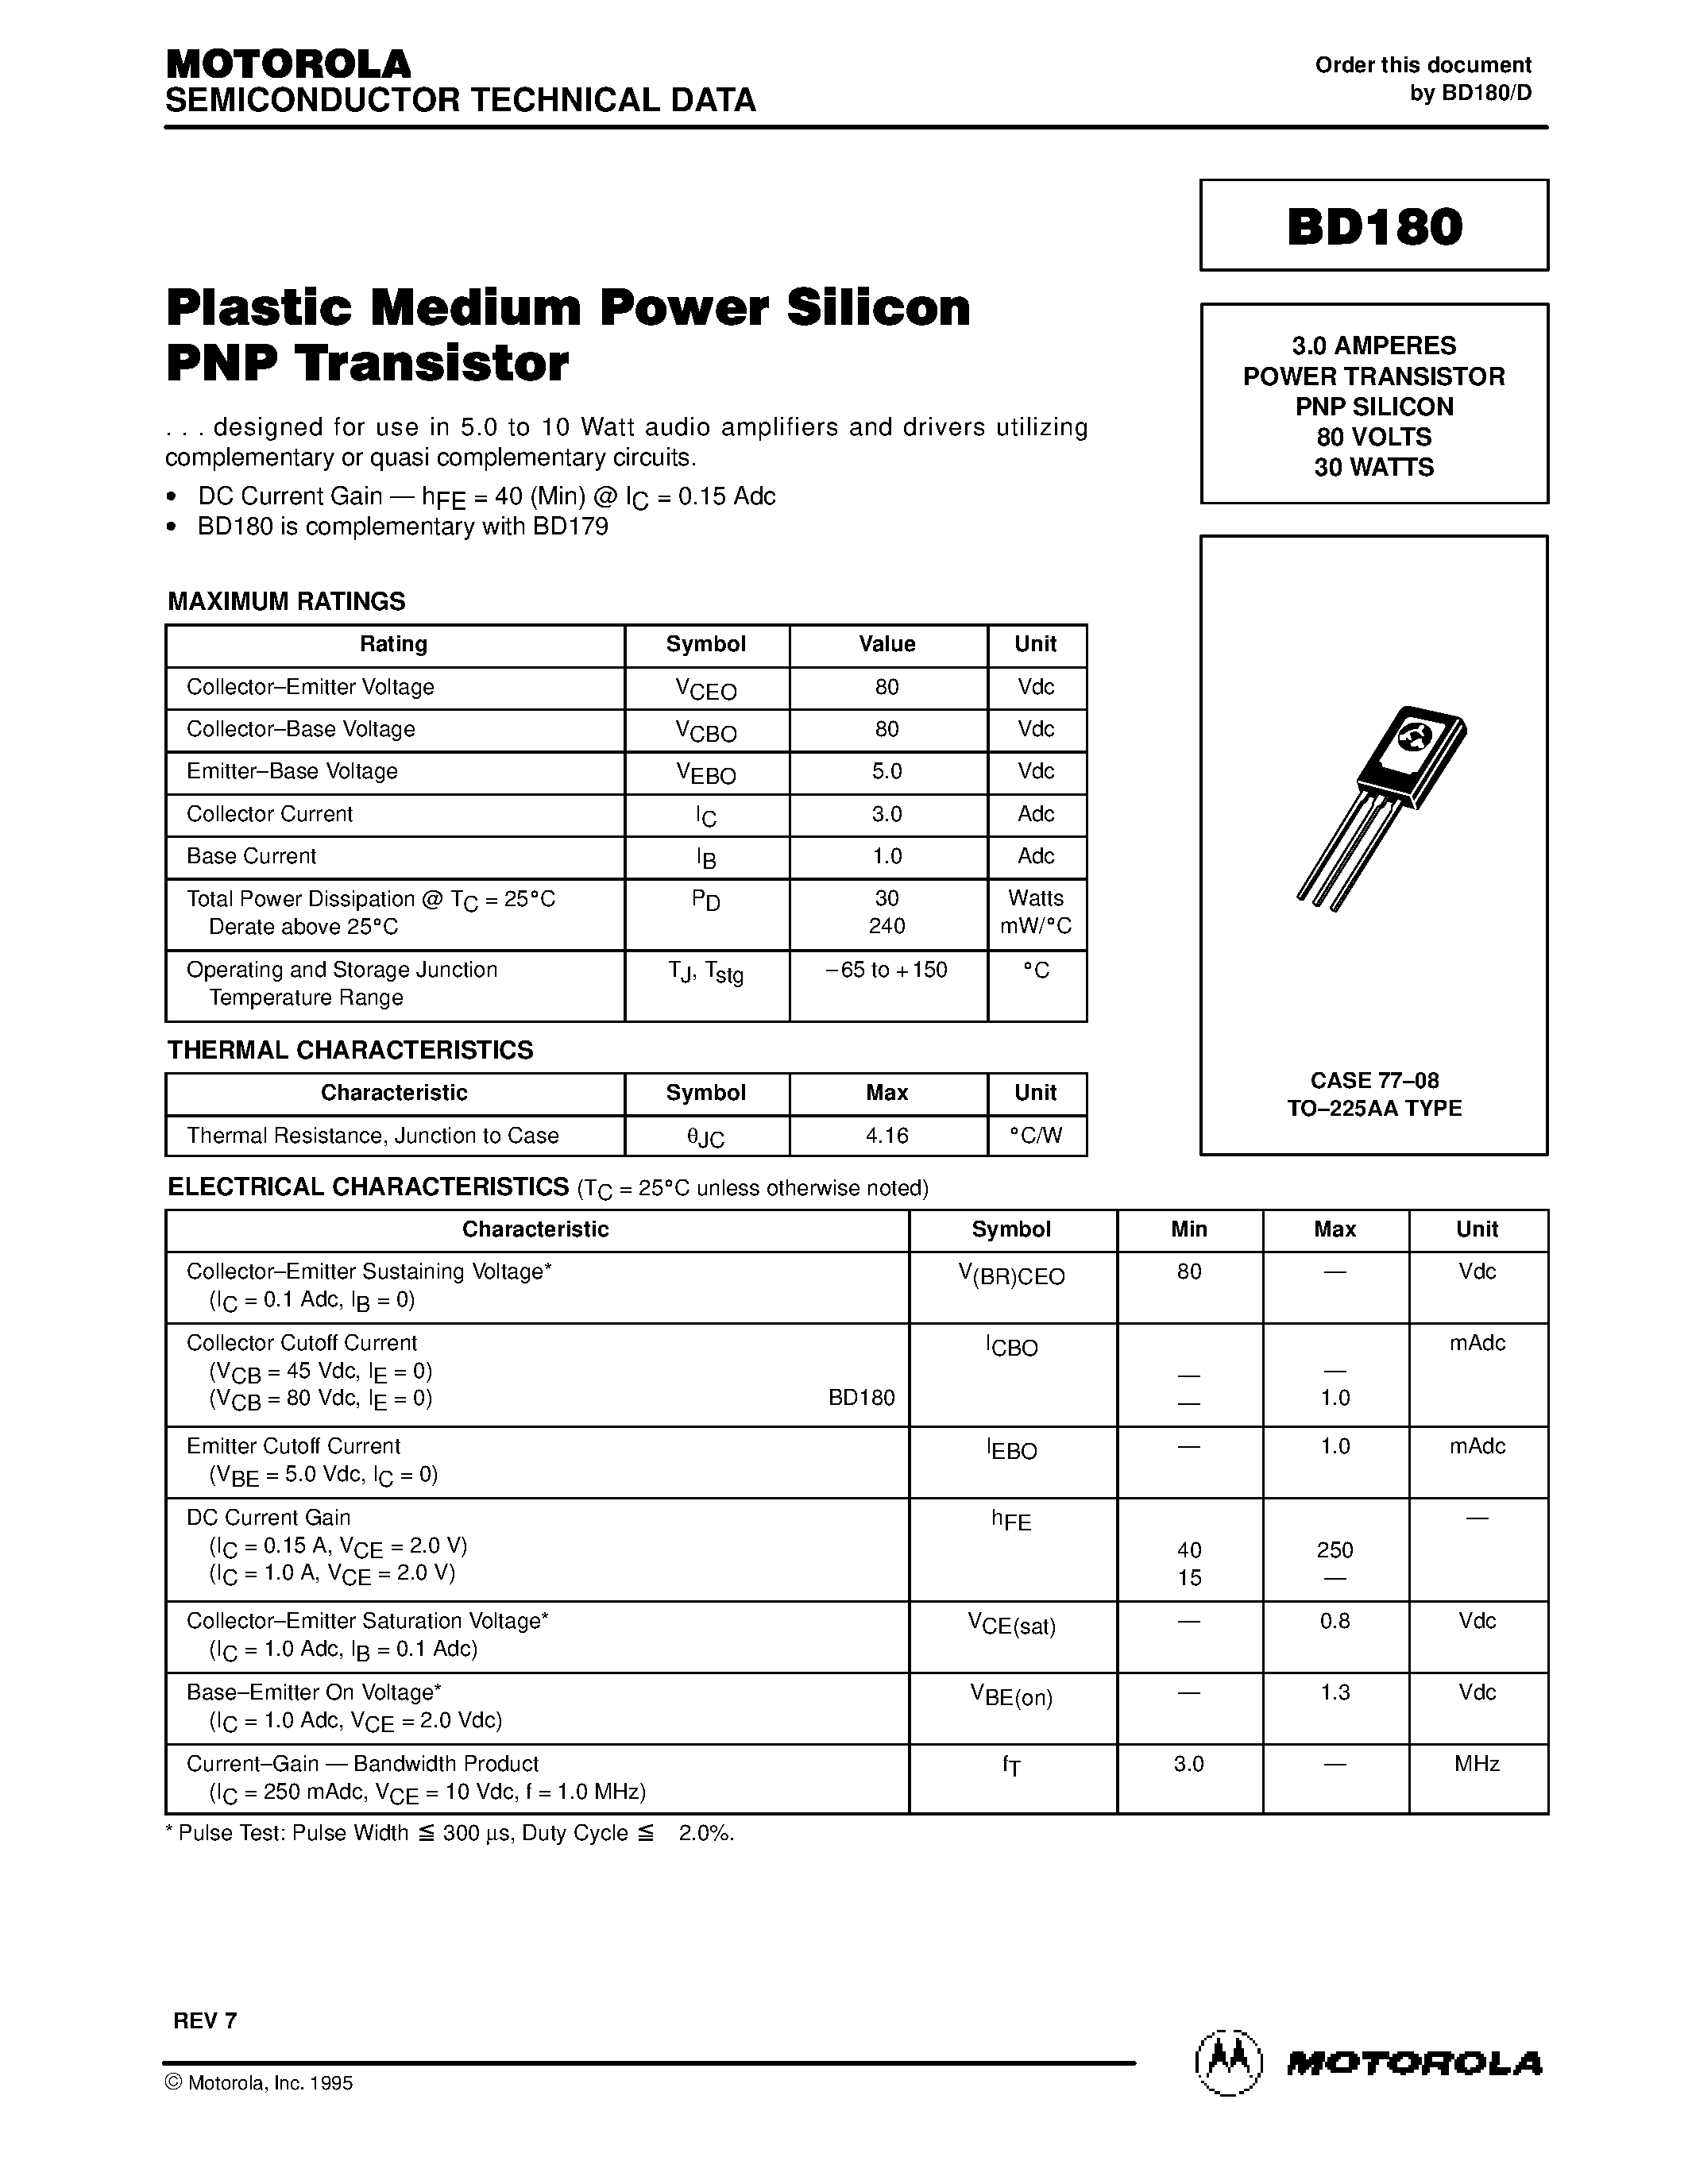 Datasheet BD180 - POWER TRANSISTOR PNP SILICON page 1